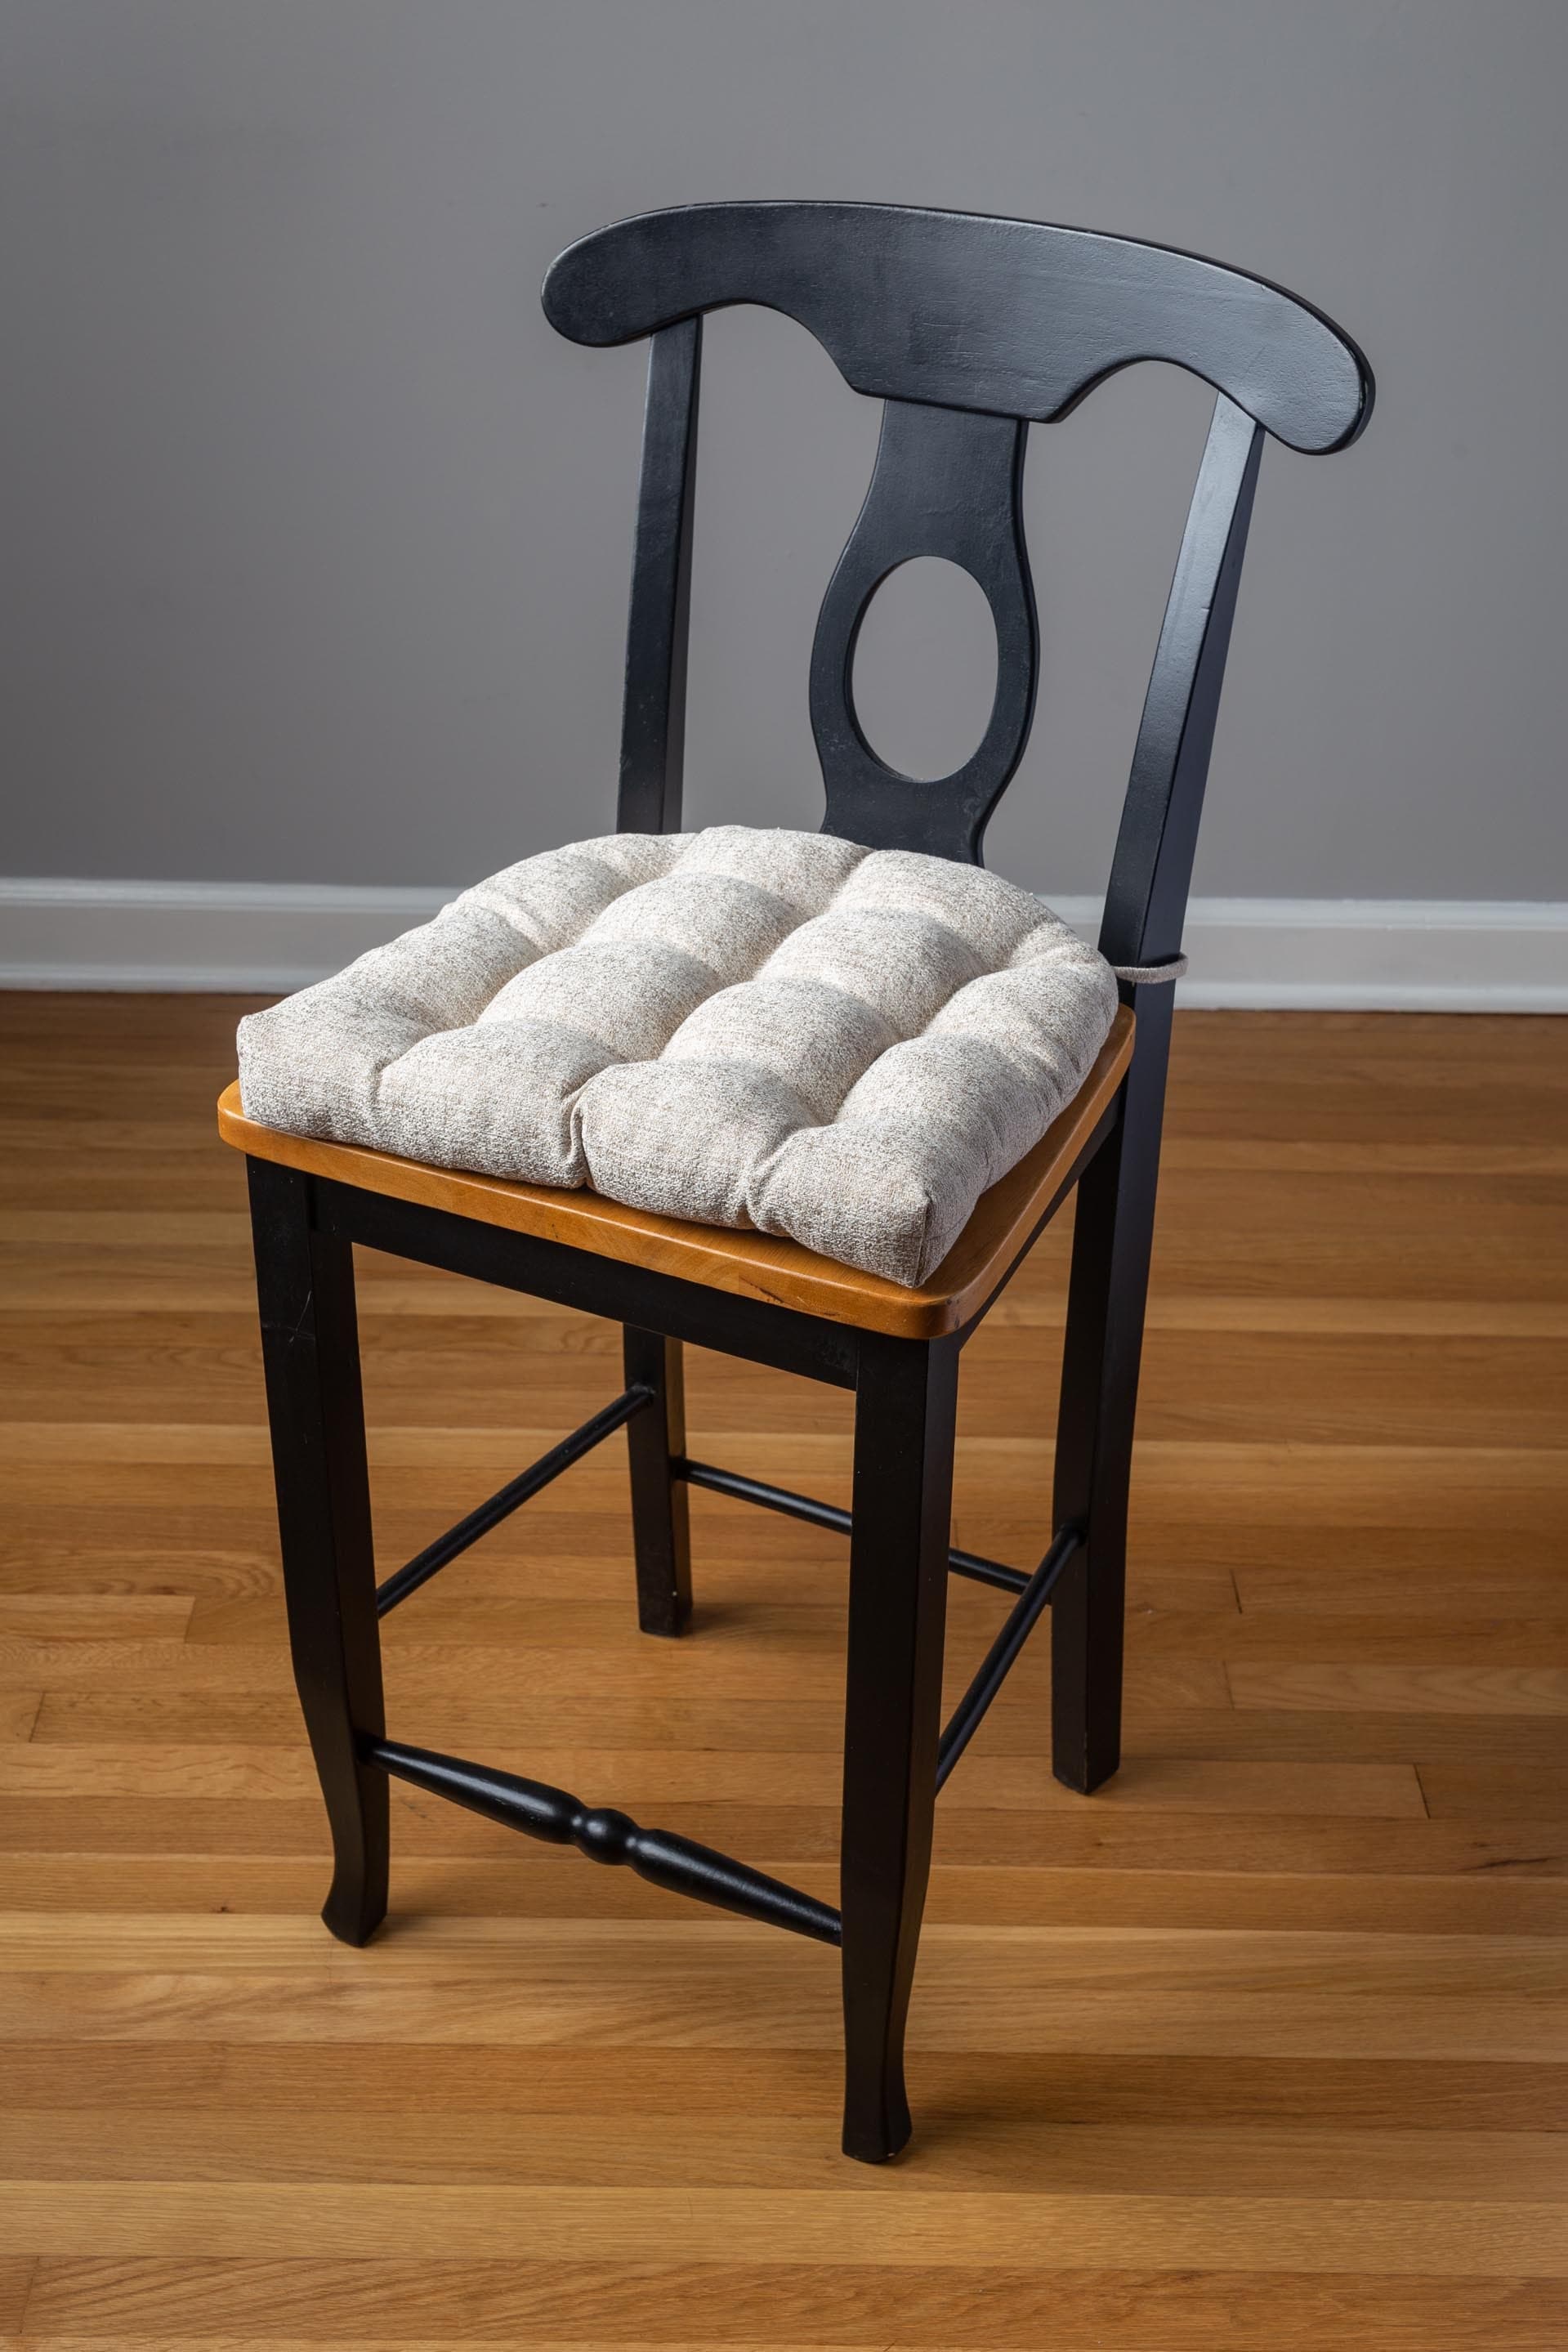 Granite Manchester Neutral Dining Chair Pad - Barnett Home Decor - Tan